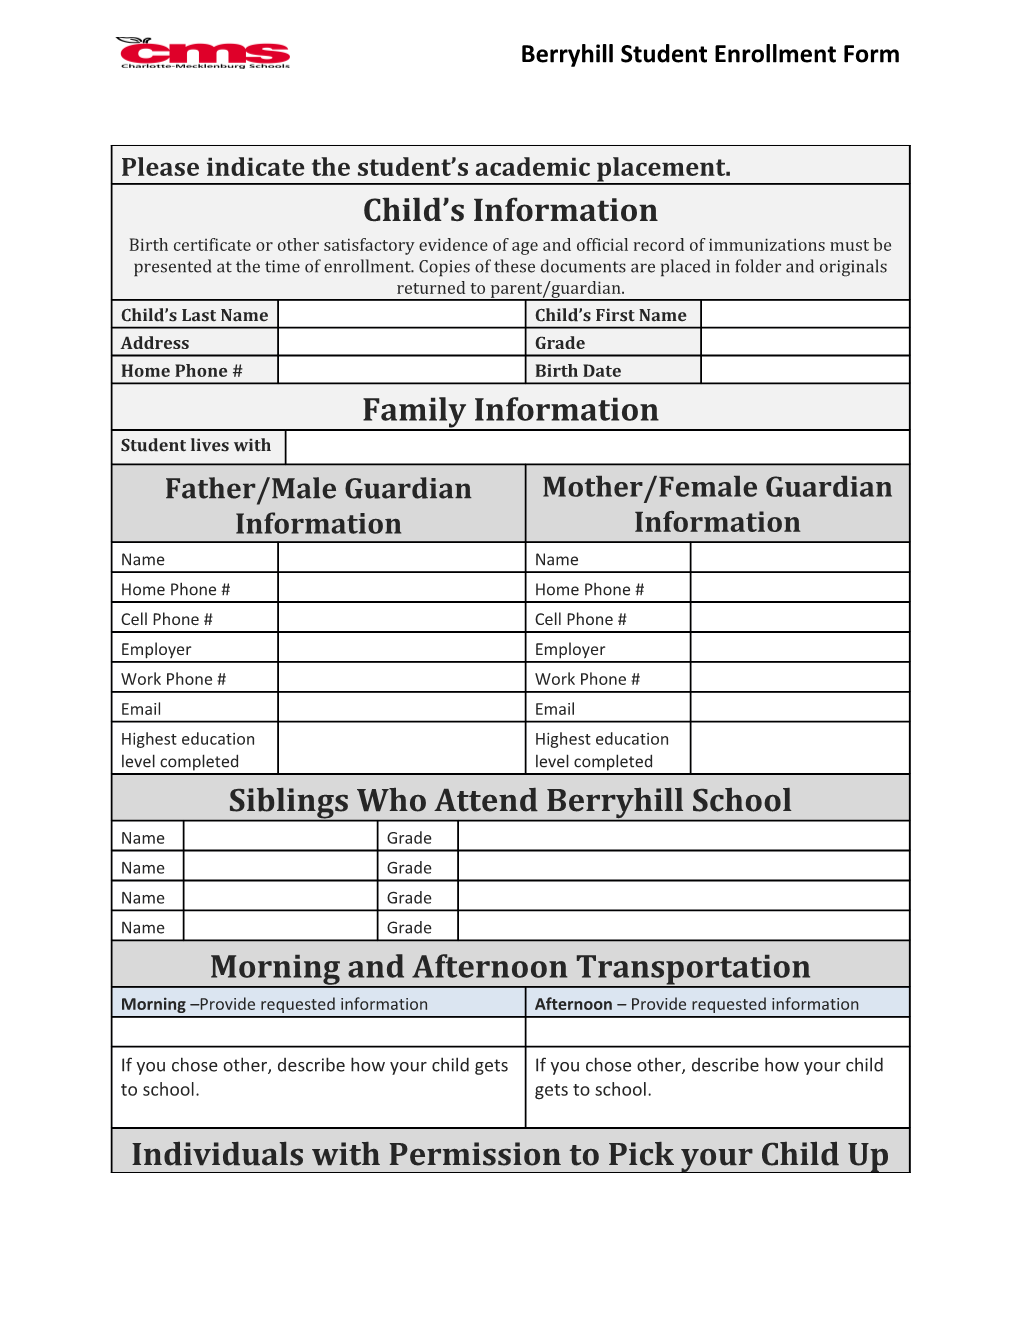 Berryhill Studentenrollment Form